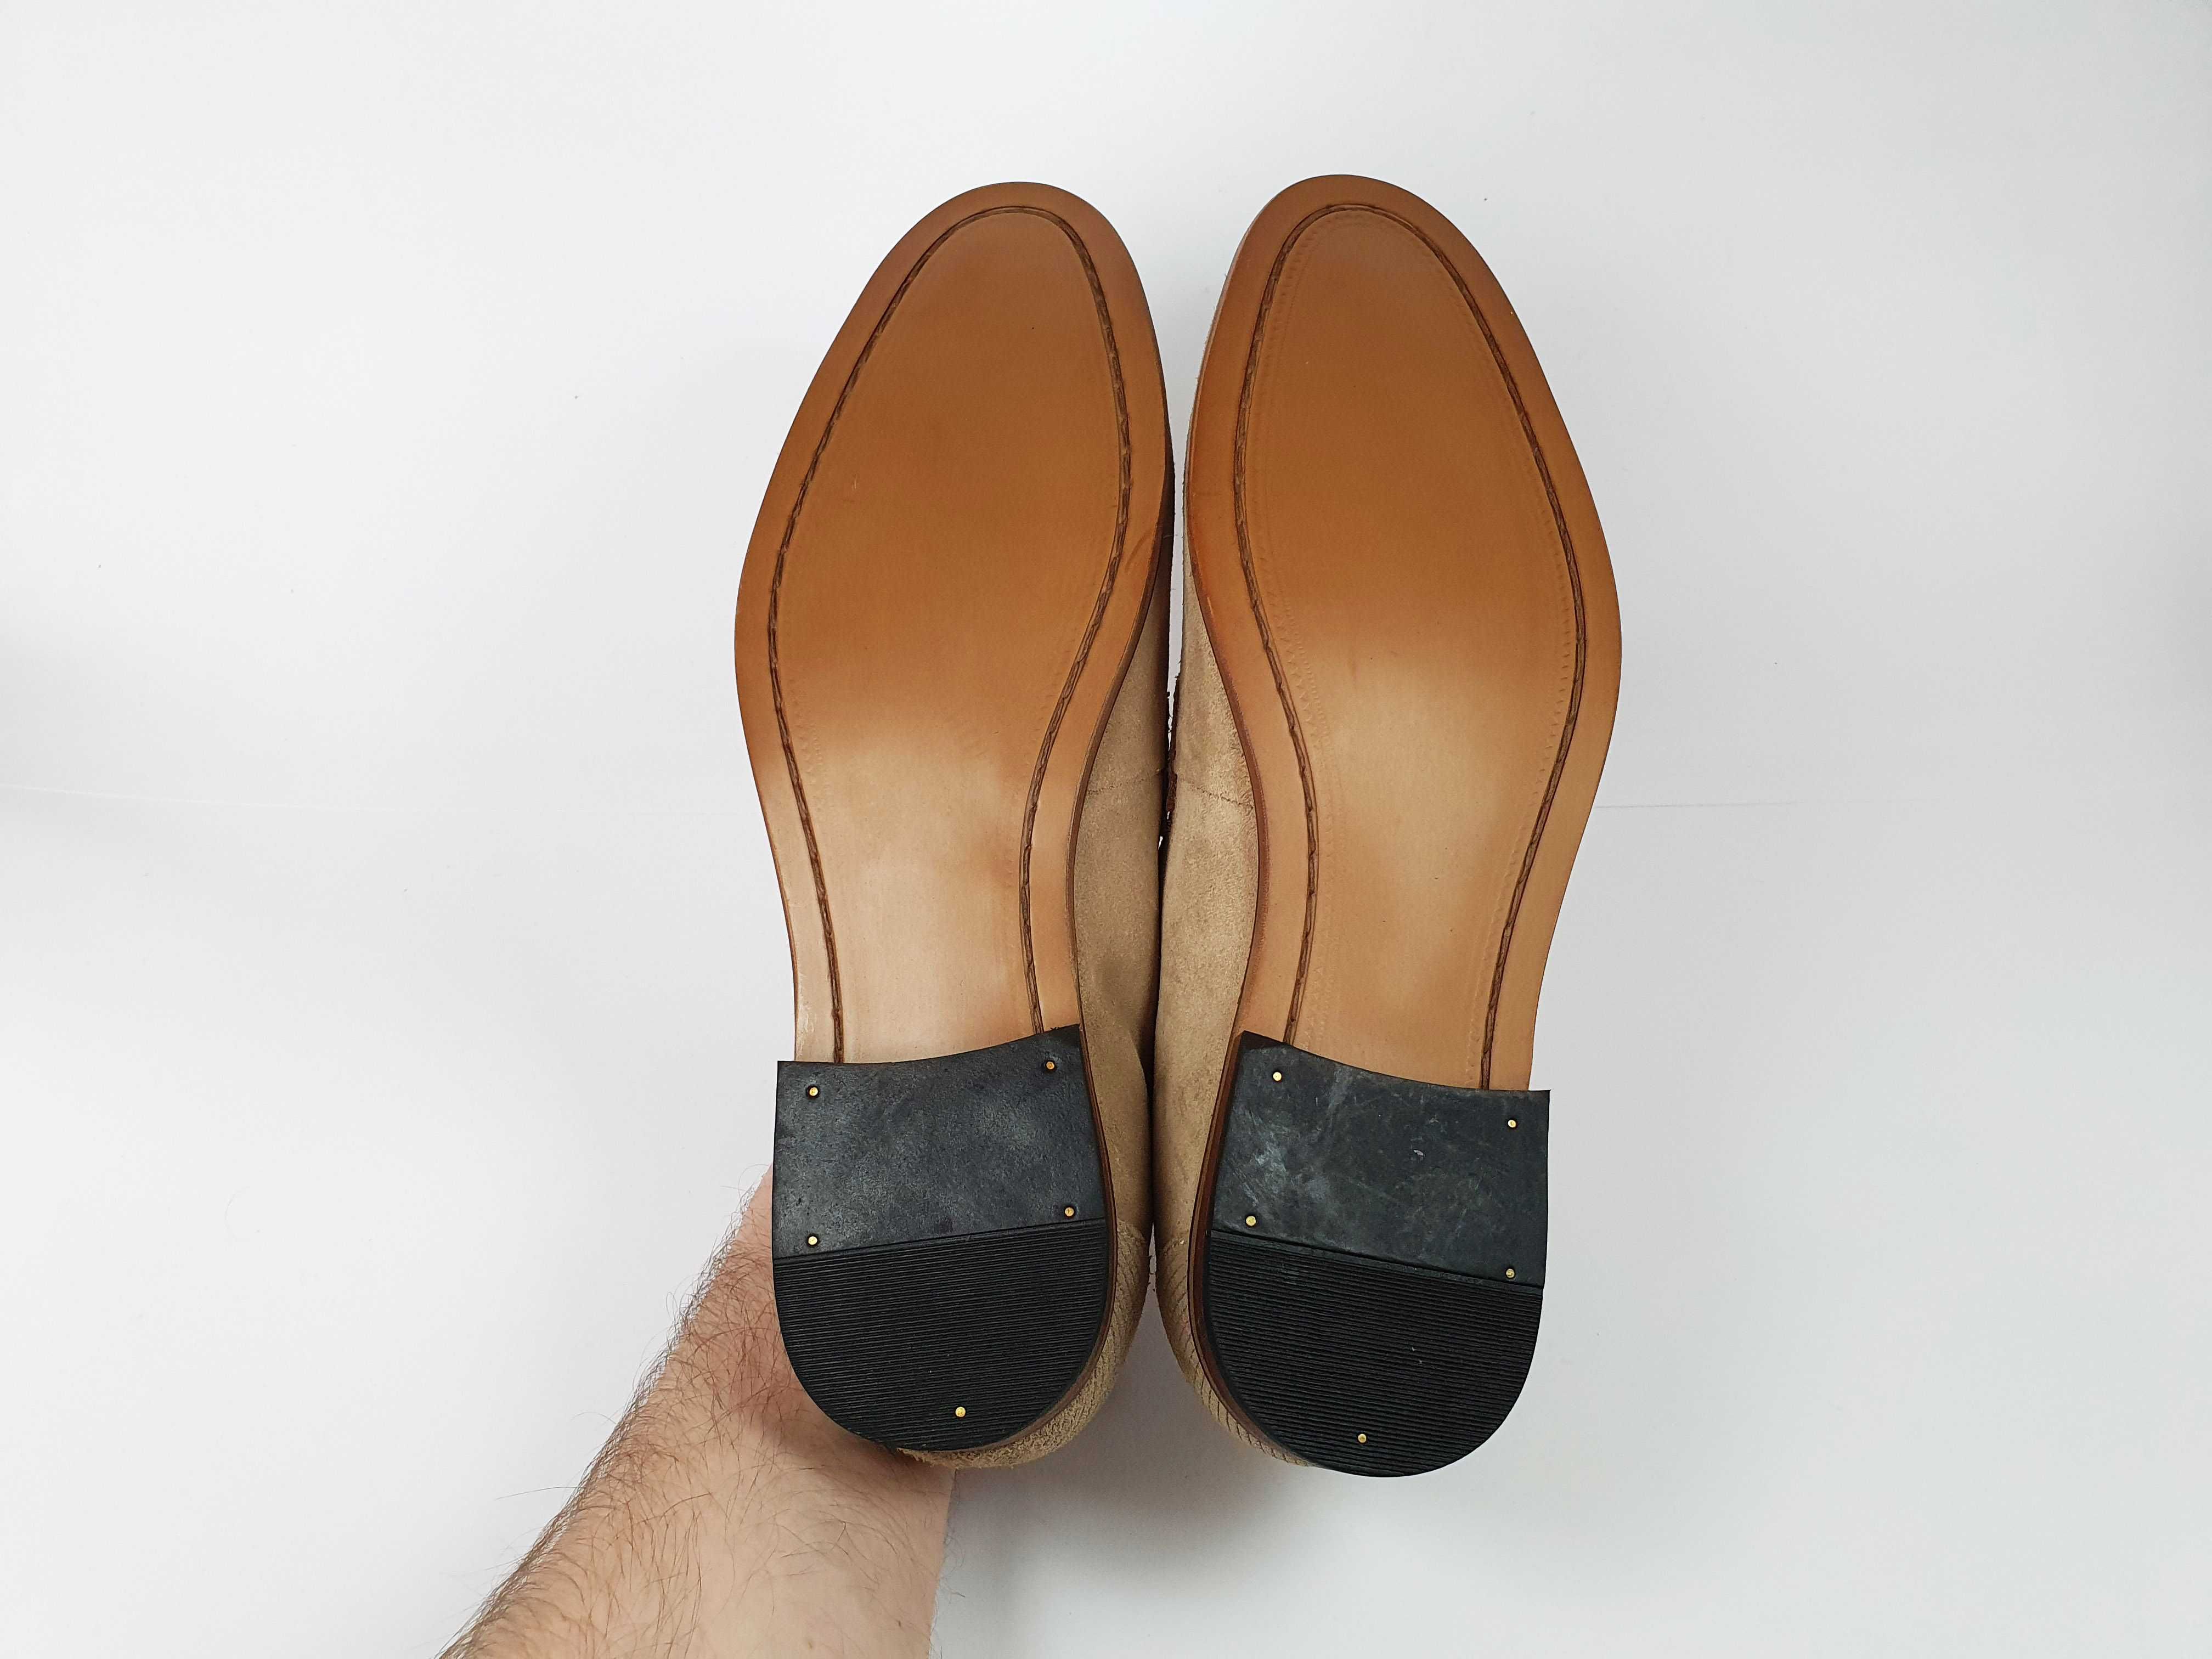 Чоловічі туфлі лофери Find Made in India лоферы туфли  44 45 29 см